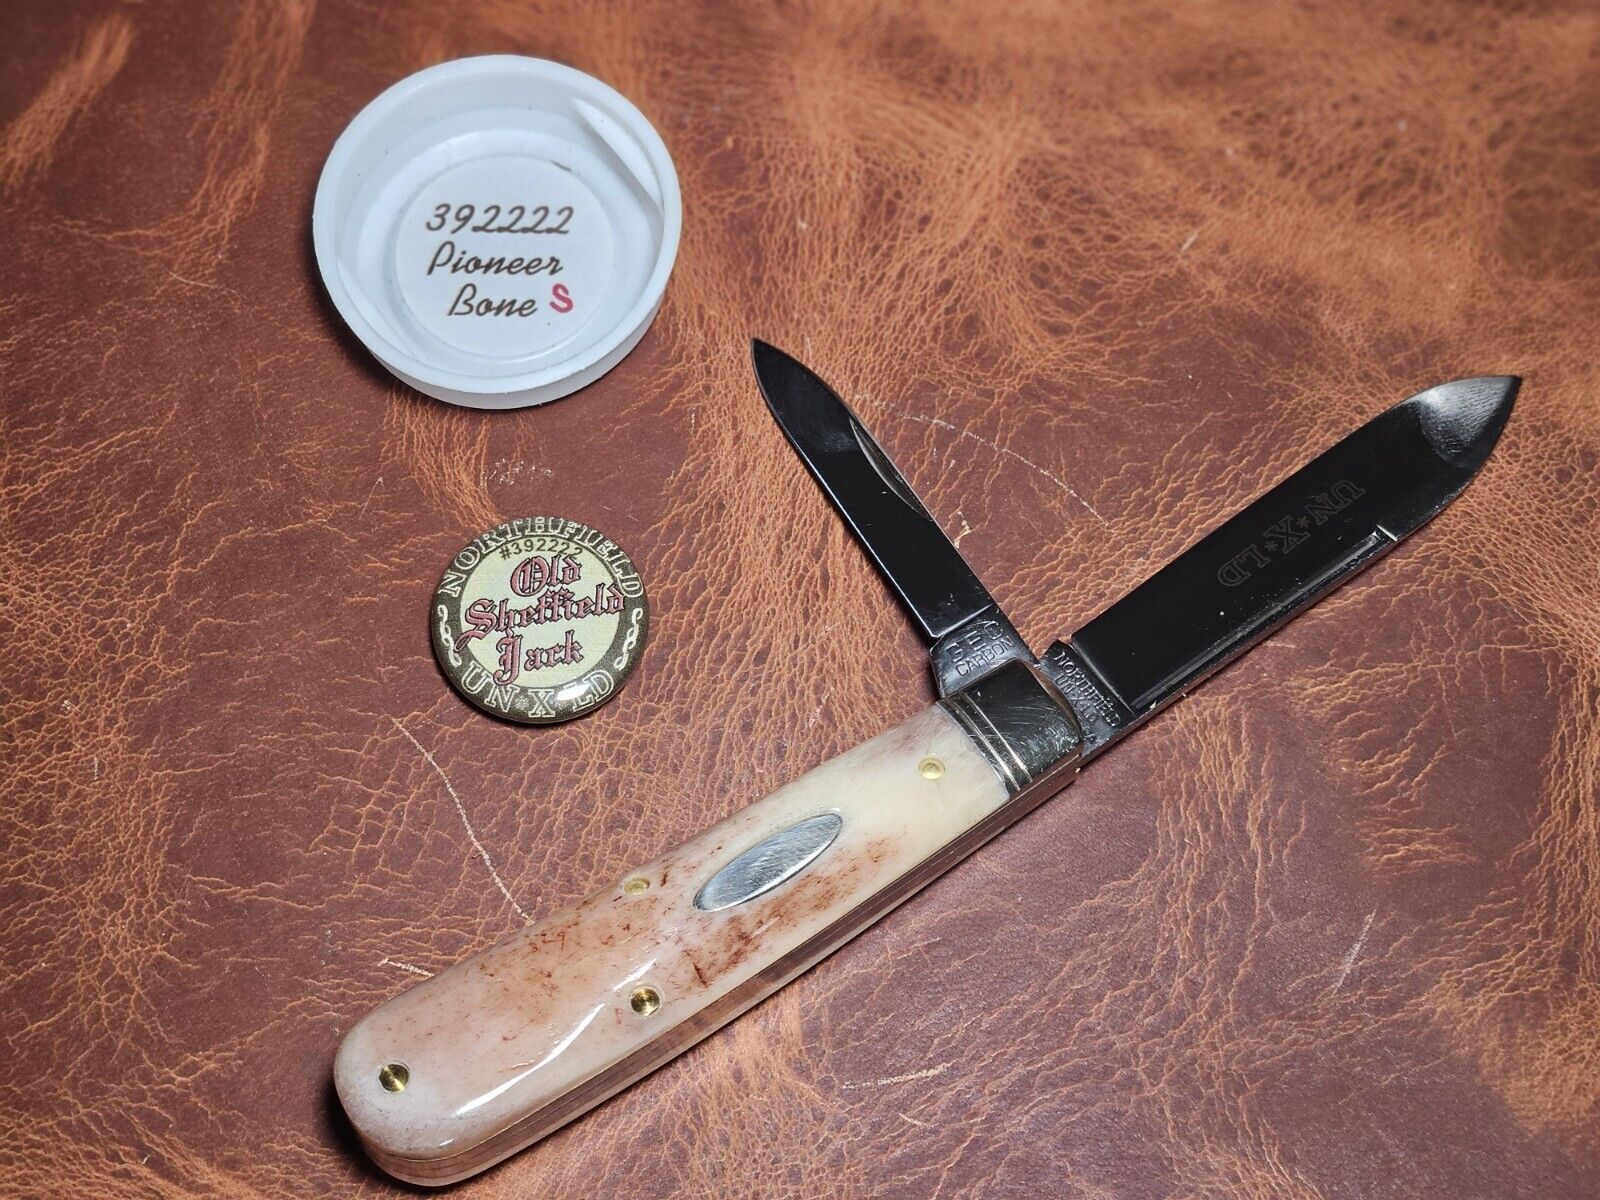 GEC Great Eastern Cutlery 392222 S Pioneer Bone Knife.